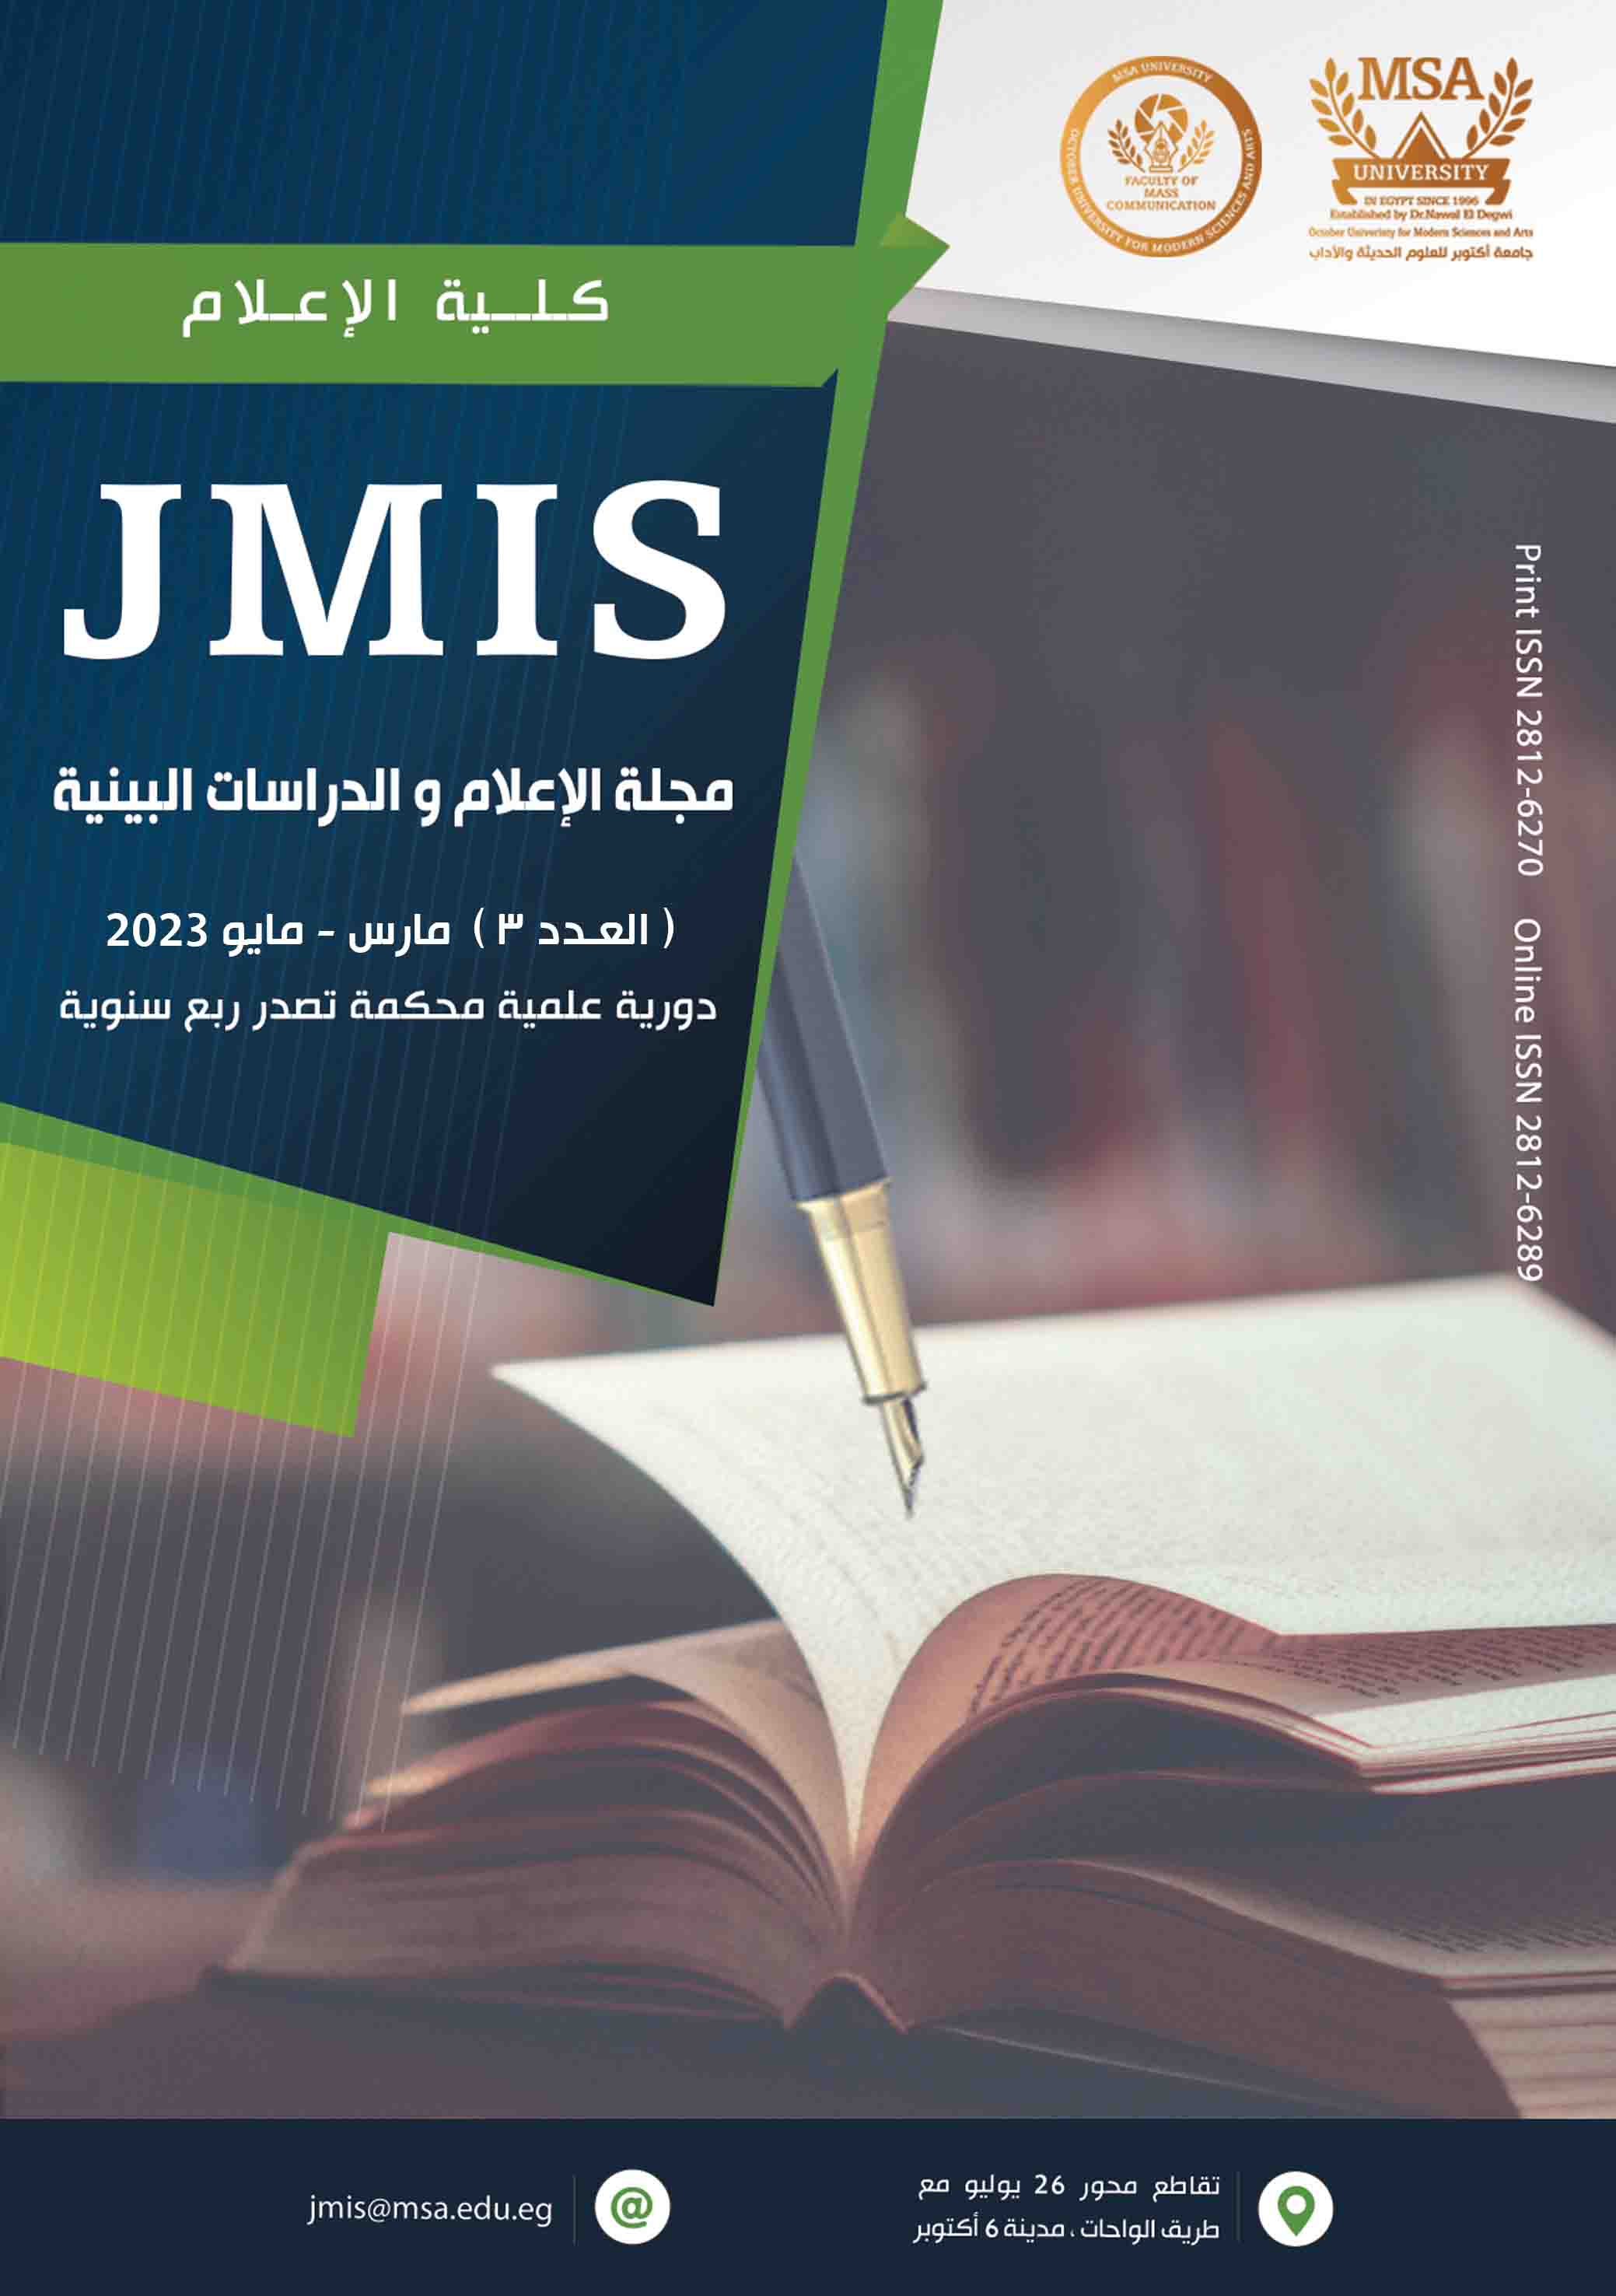 Journal of Media and Interdisciplinary Studies